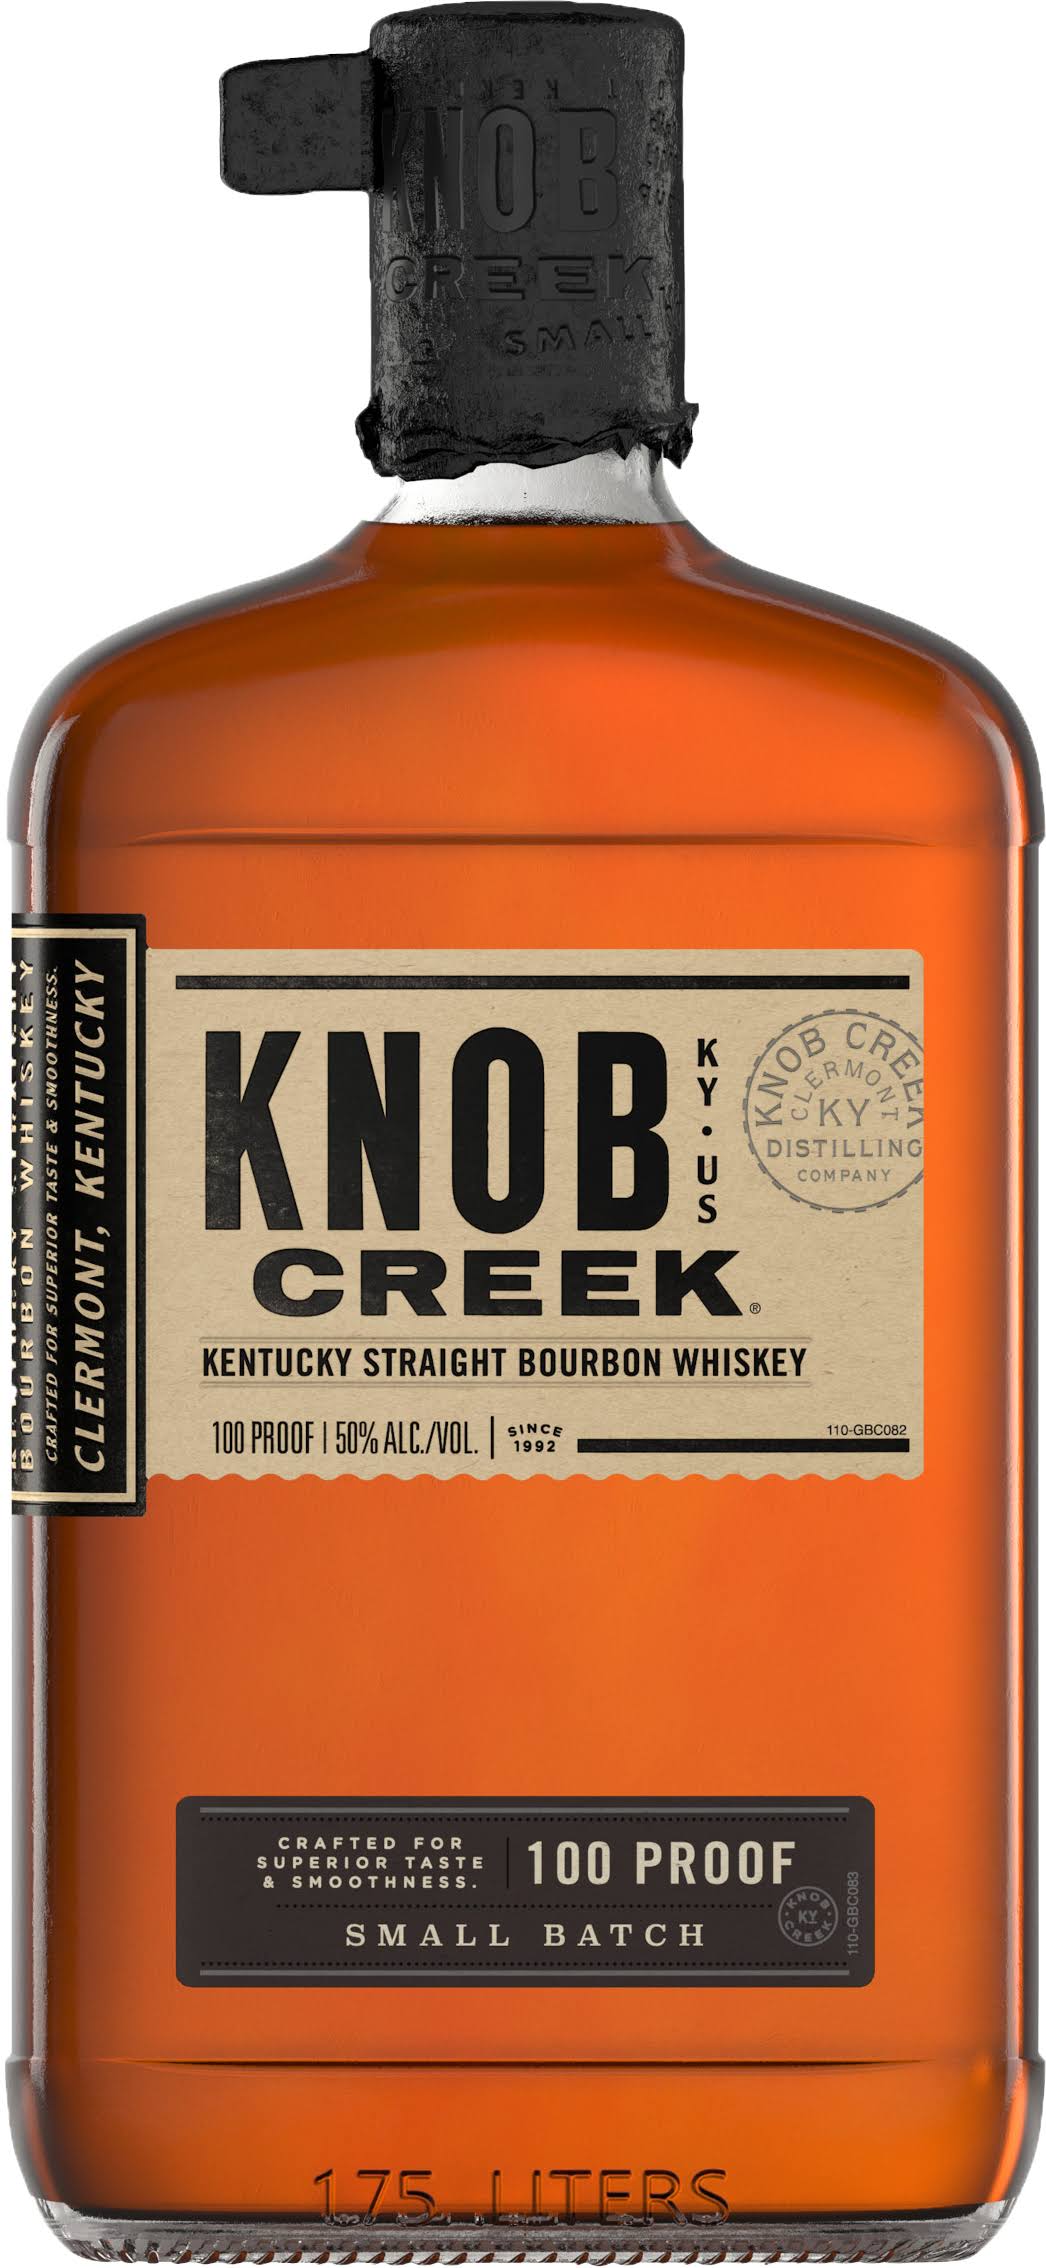 Knob Creek Bourbon Whiskey, Kentucky Straight - 1.75 liters